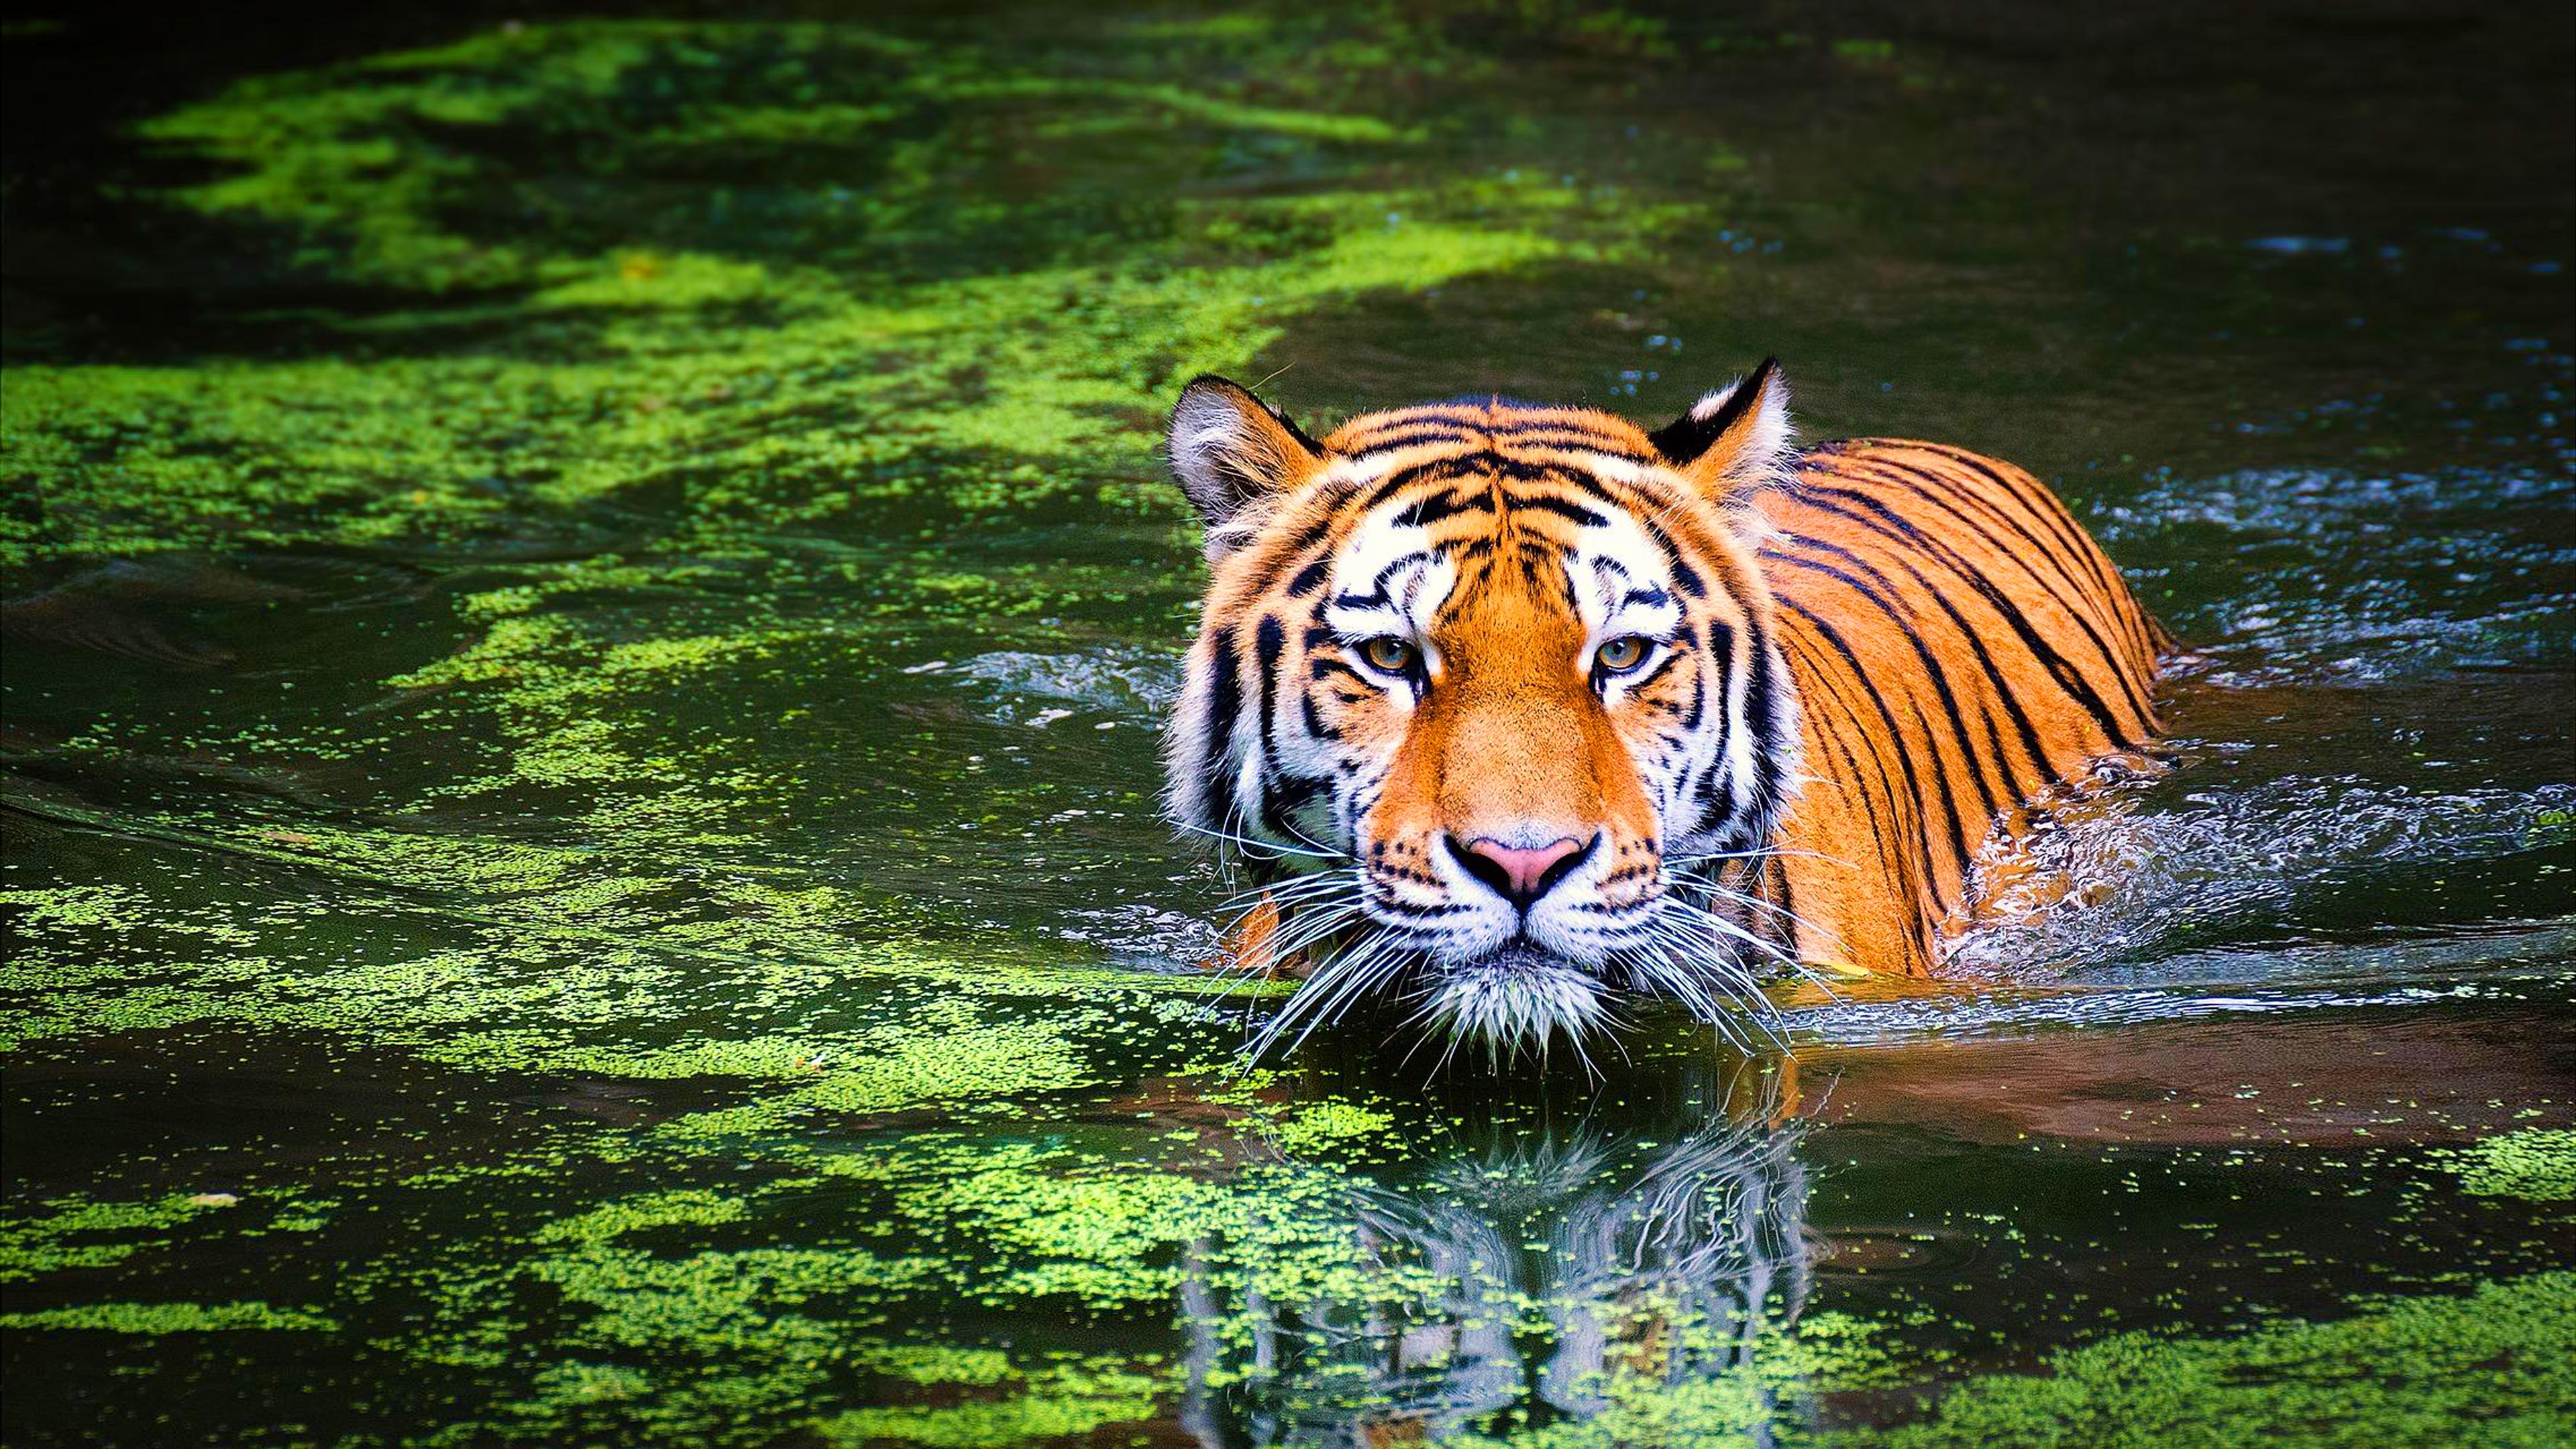 Animal Bengal Tiger Swimming 4k Ultra Hd Wallpaper For Desktop Laptop  Tablet And Mobile Phones : 